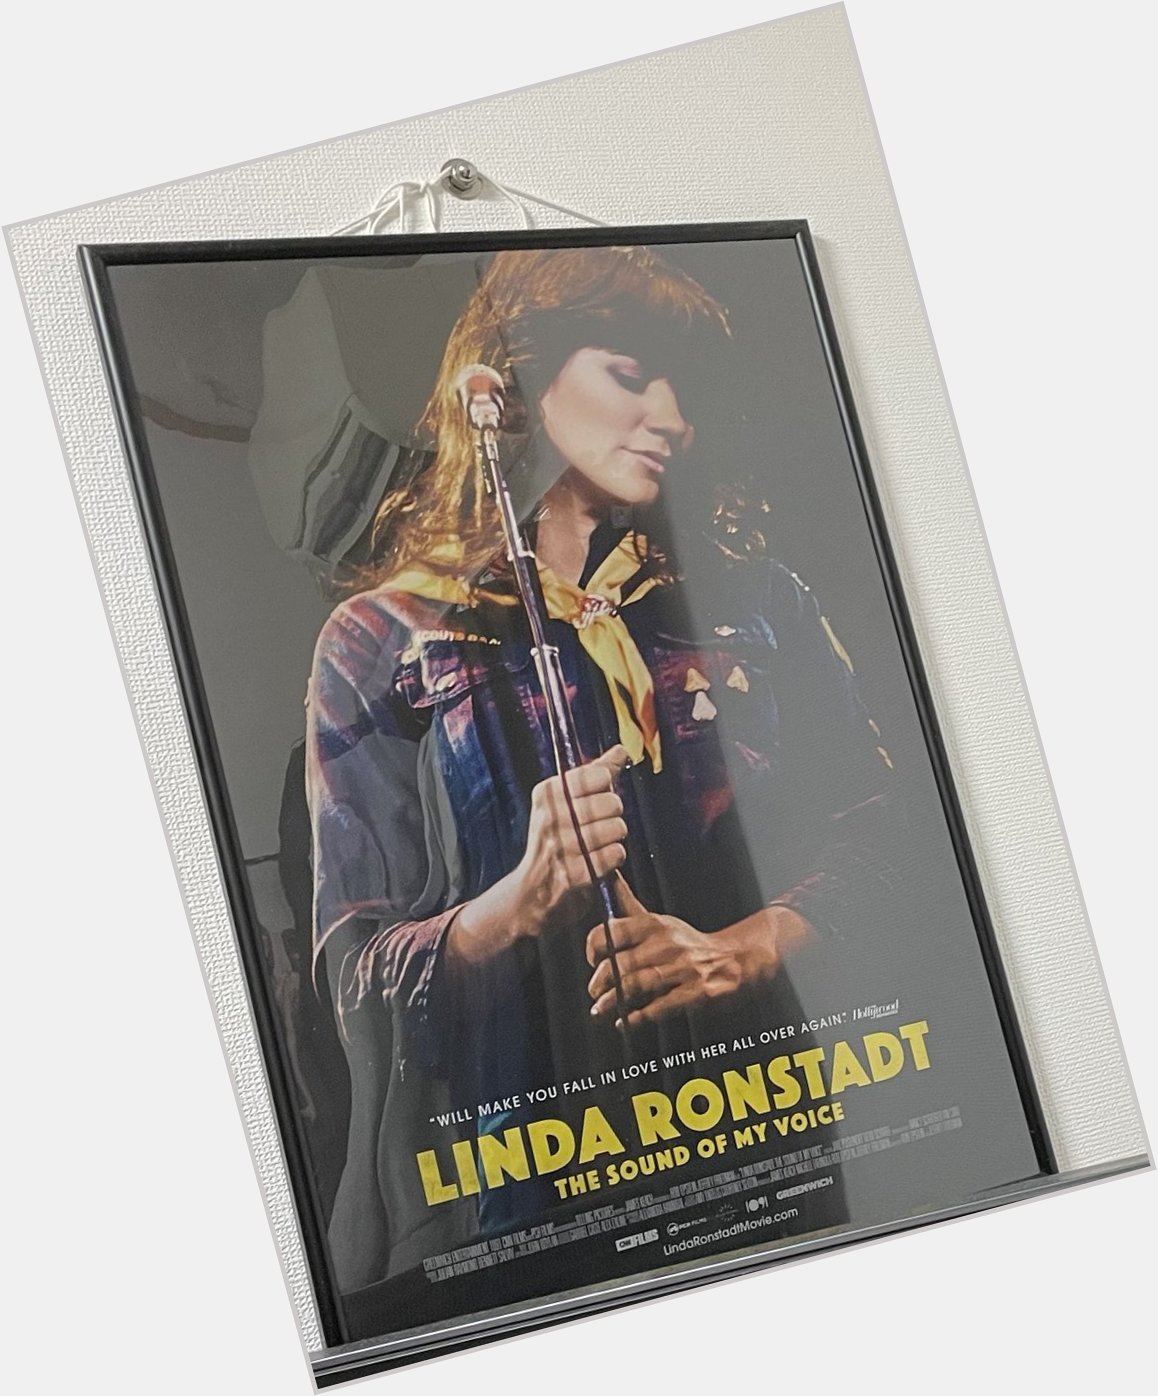           Happy Birthday Linda Ronstadt! 